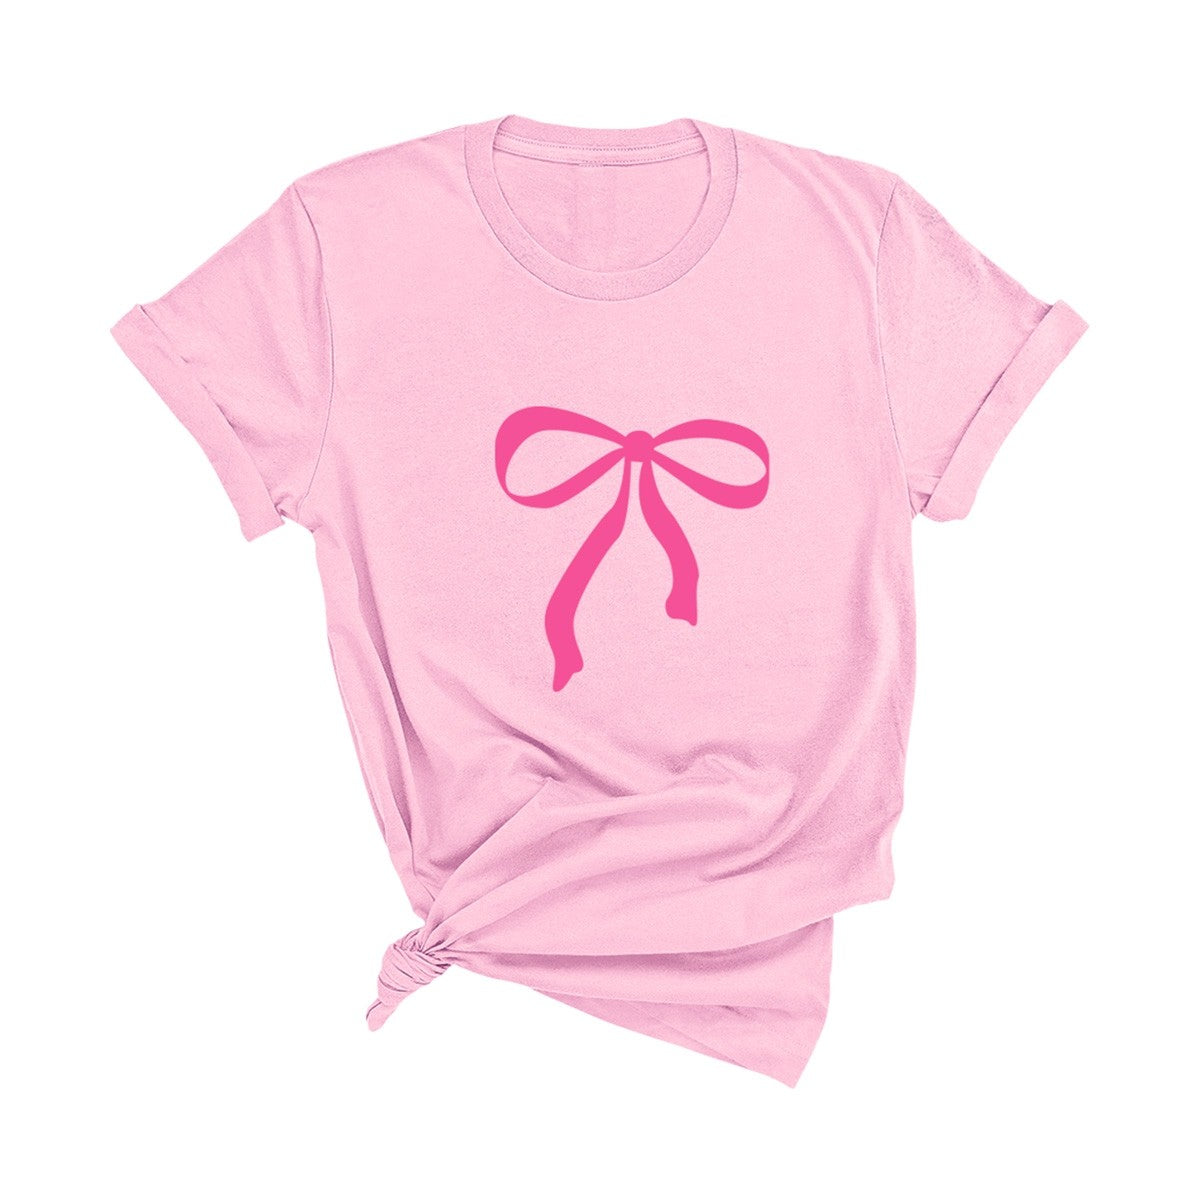 Hot Pink Bow T-Shirt